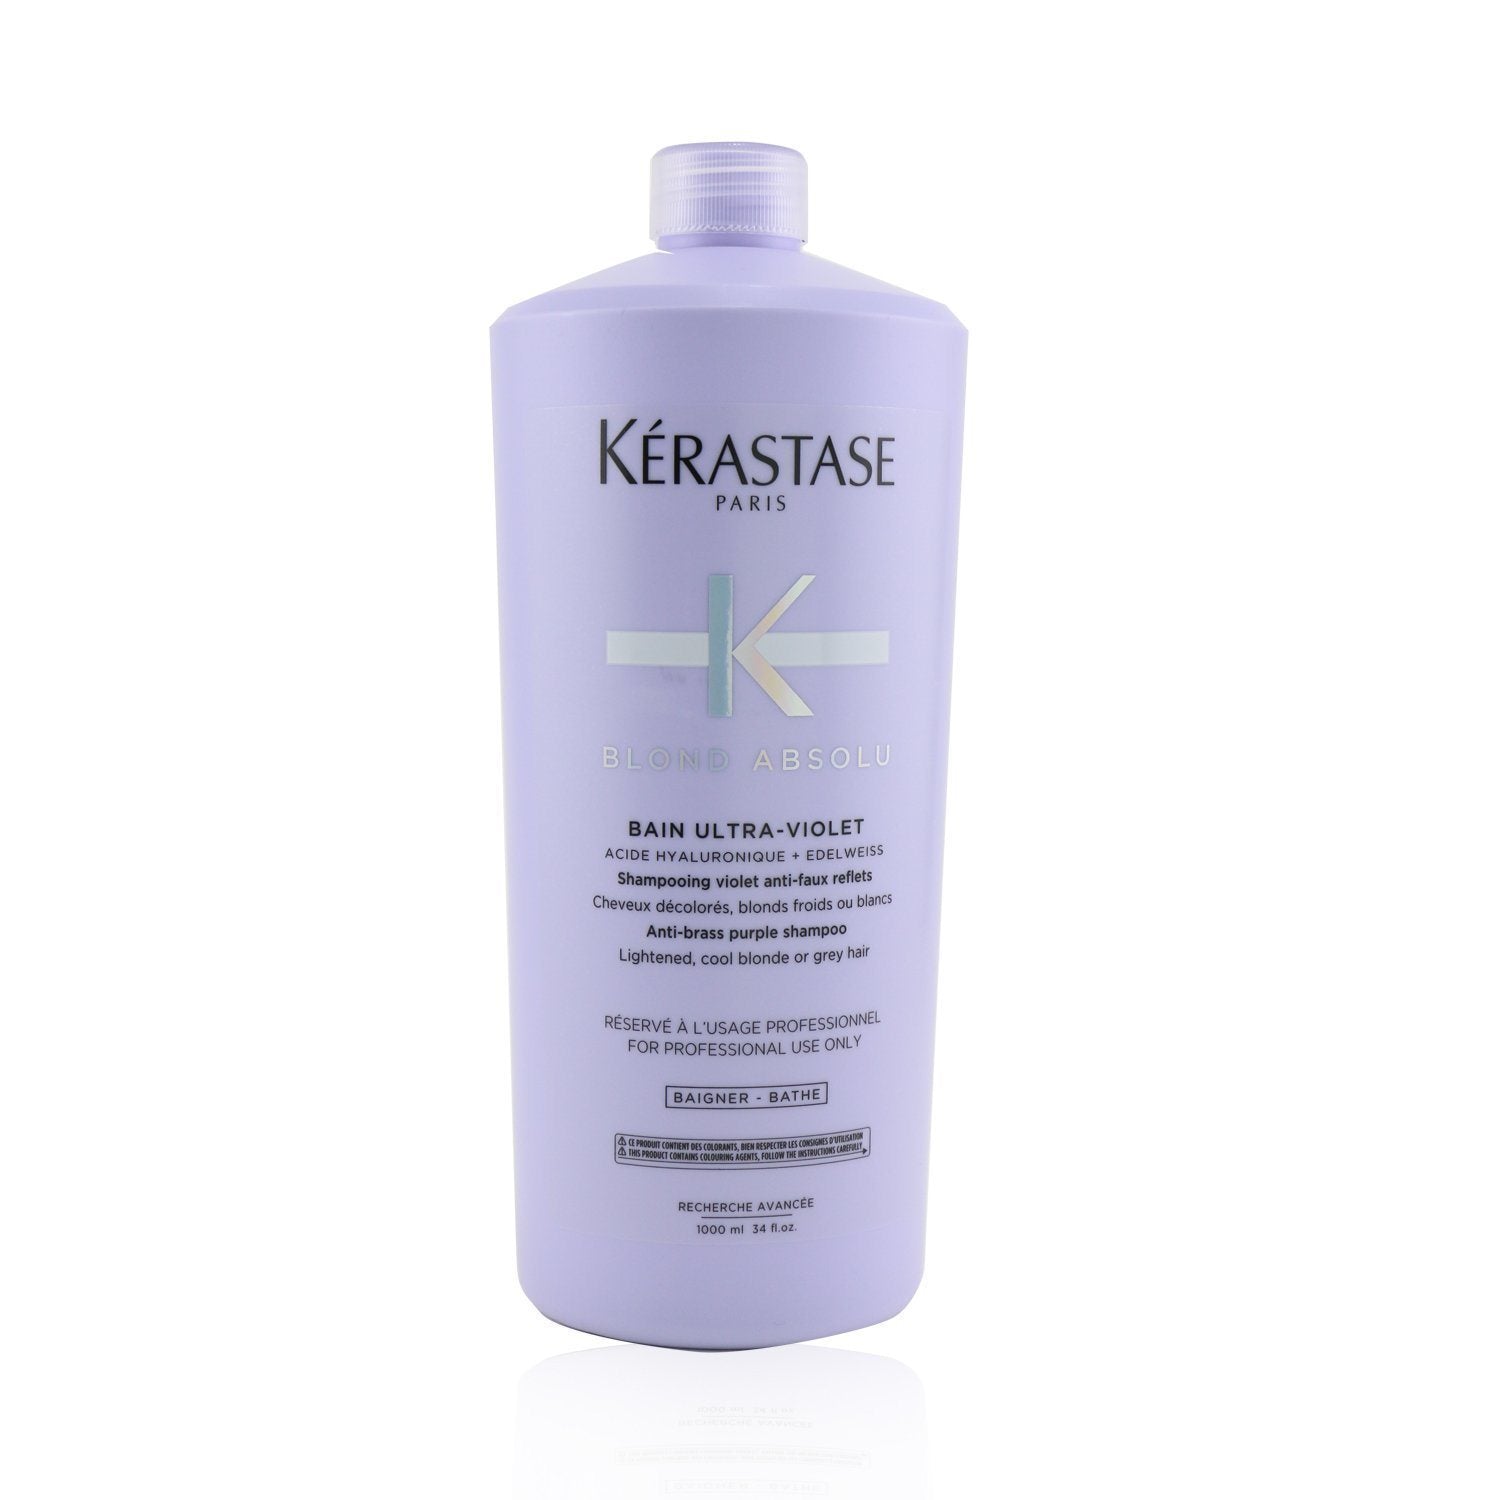 KERASTASE - Blond Absolu Bain Ultra-Violet Anti-Brass Purple Shampoo (Lightened, Cool Blonde or Grey Hair) - 1000ml/34oz 3P's Inclusive Beauty